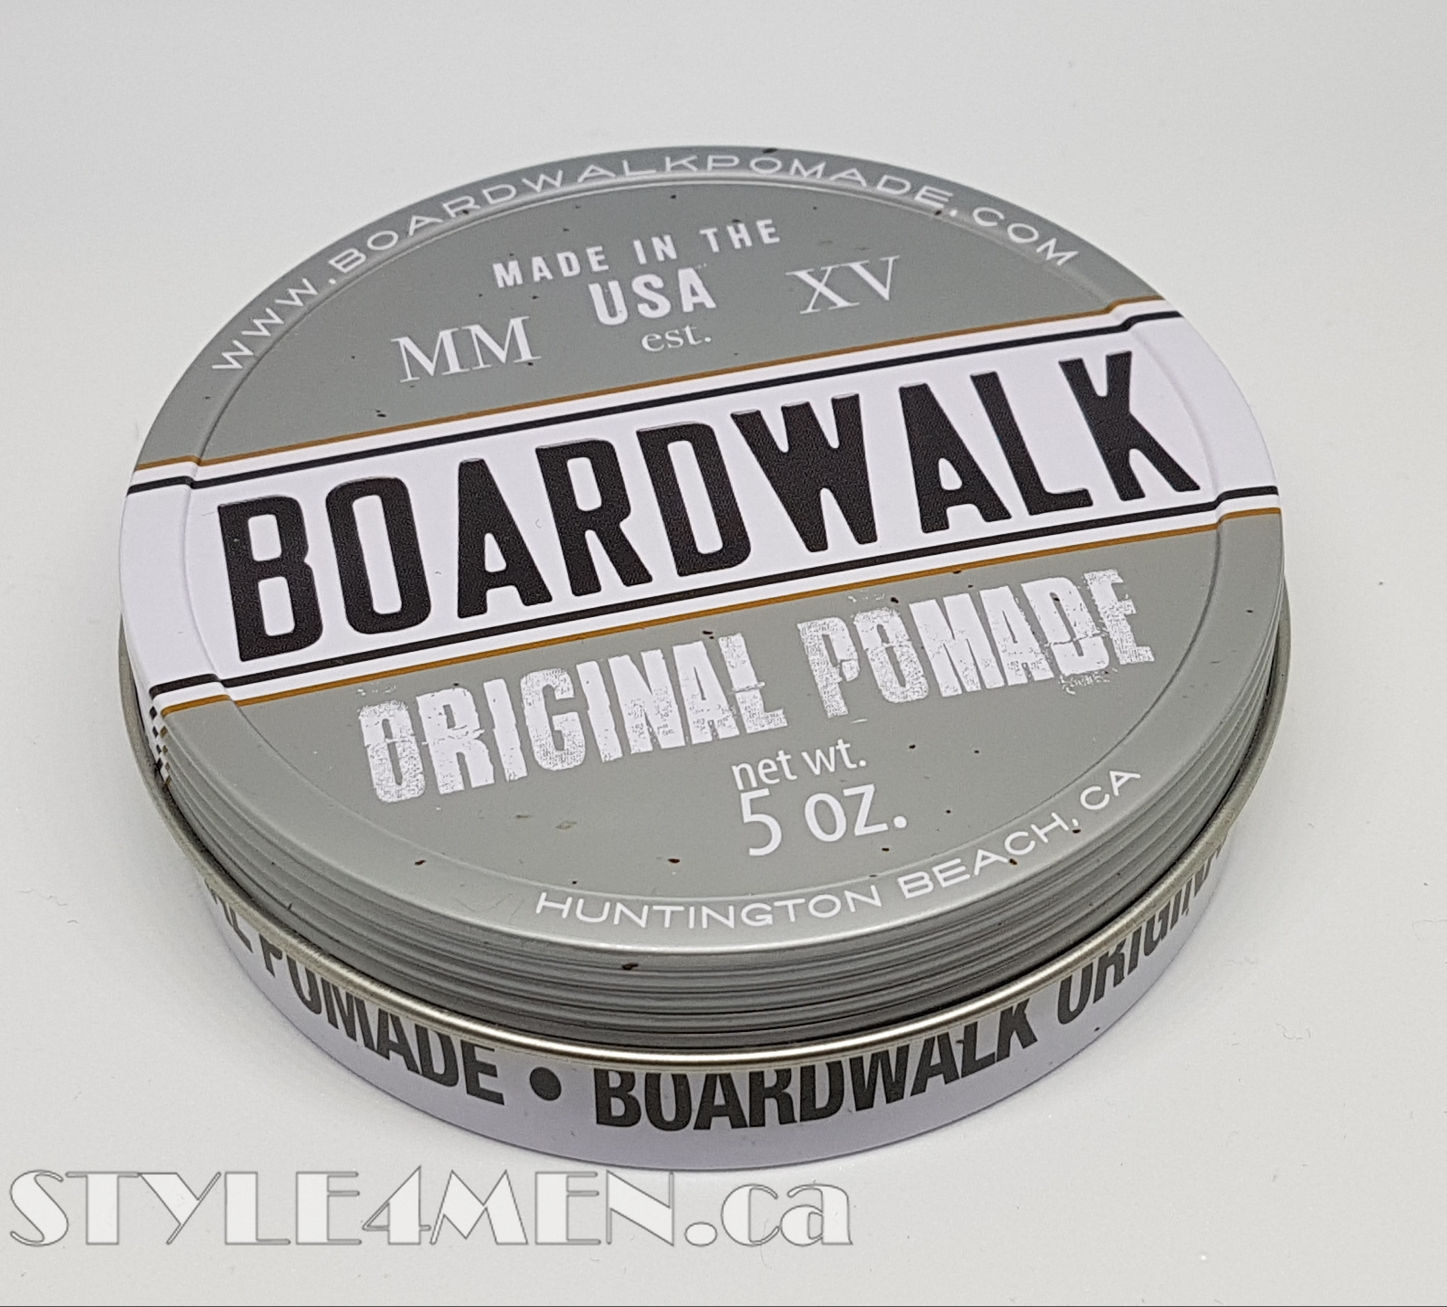 Boardwalk Original Pomade